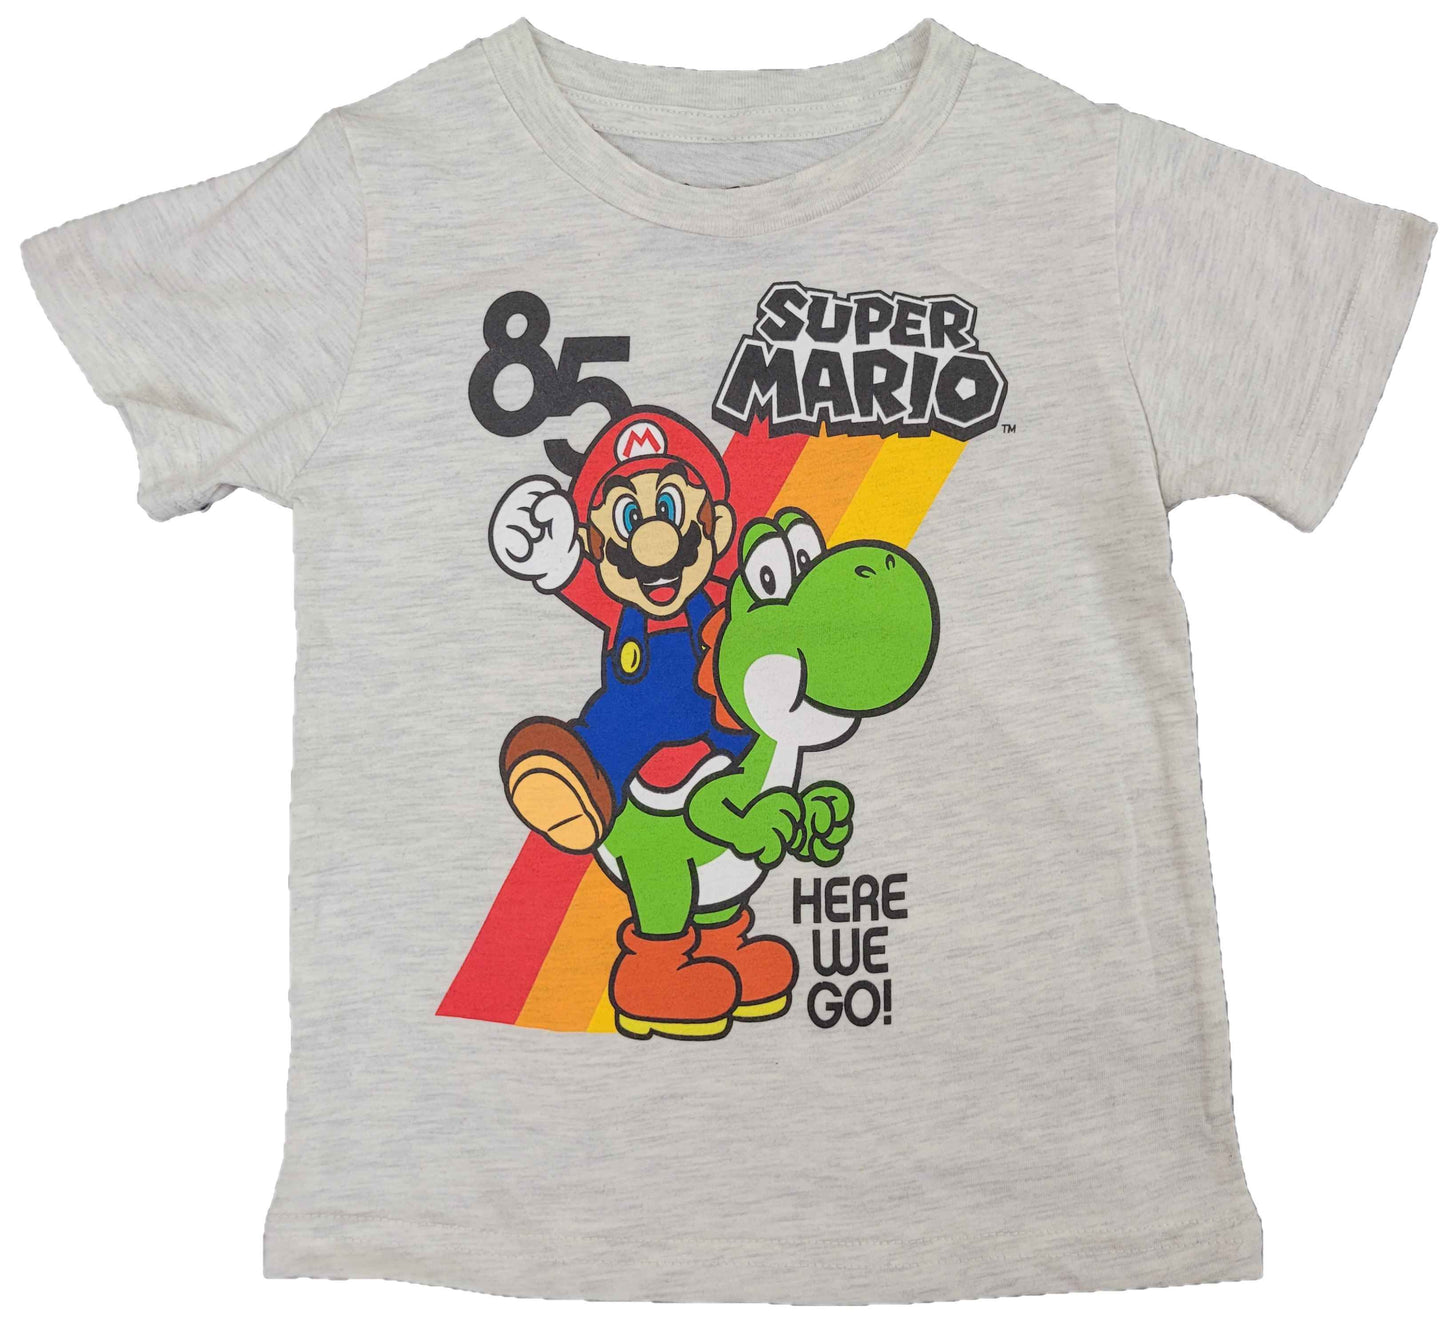 Super Mario 1985 Here We Go Mario & Yoshi Boys T-Shirt 2T 3T 4T